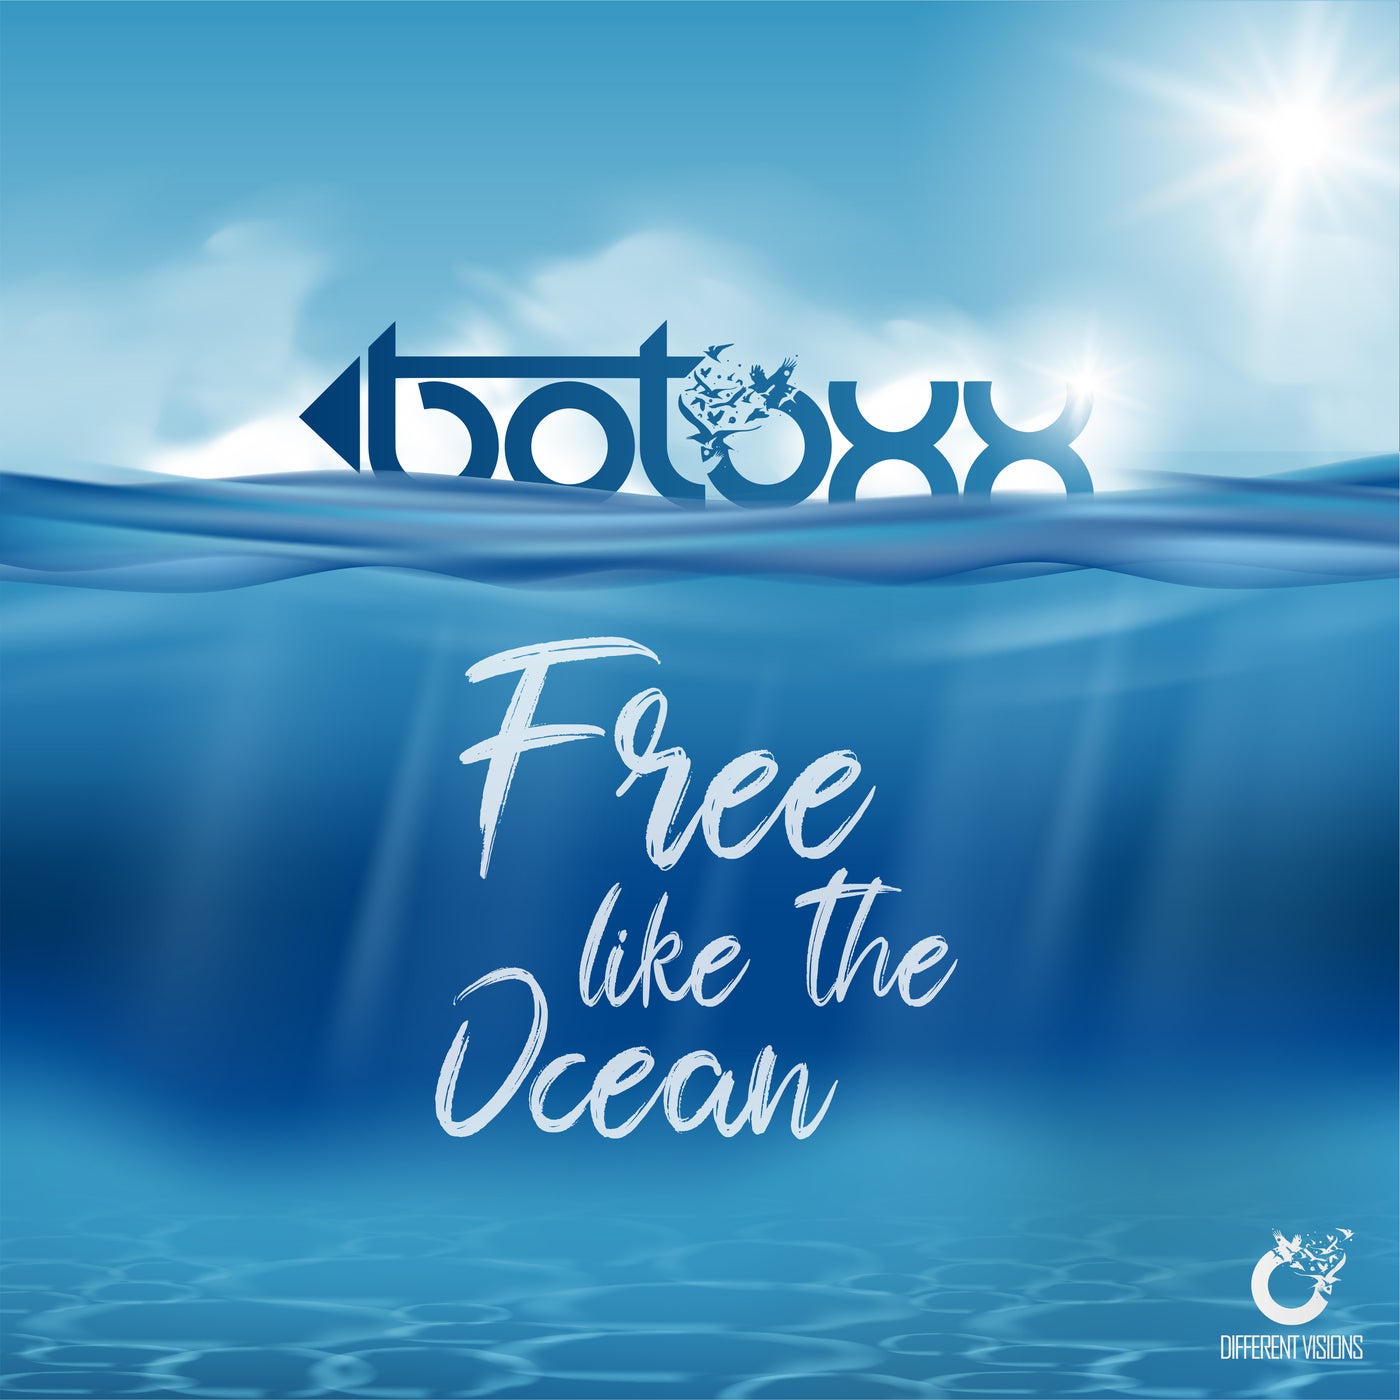 Free Like The Ocean